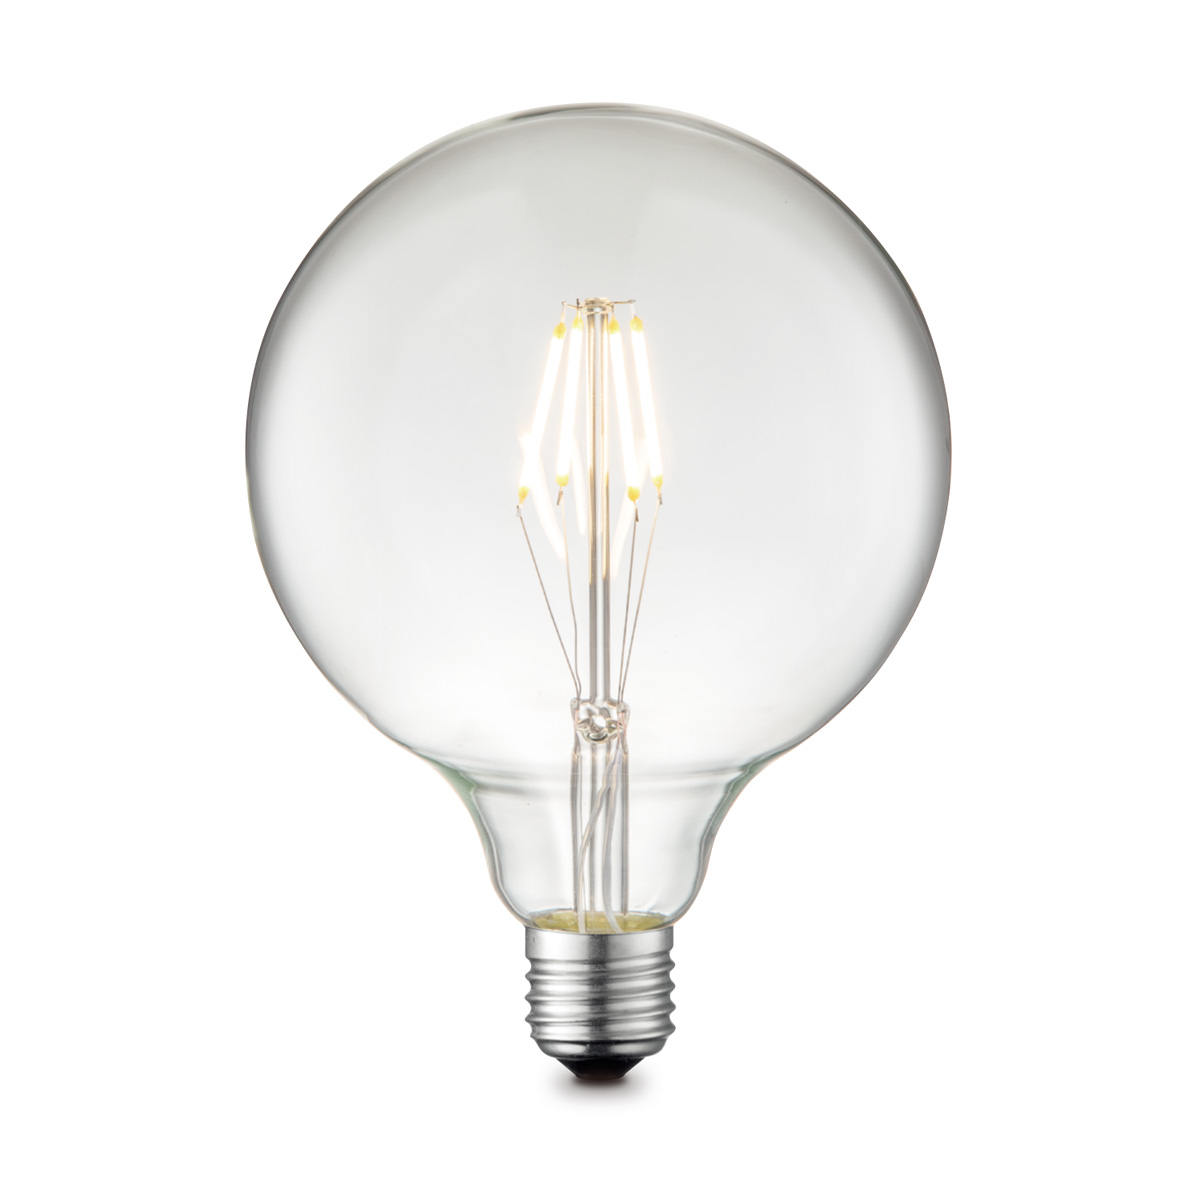 Tangla lighting - TLB-8005-06CL - LED Light Bulb Deco filament - G125 6W clear - dimmable - E27